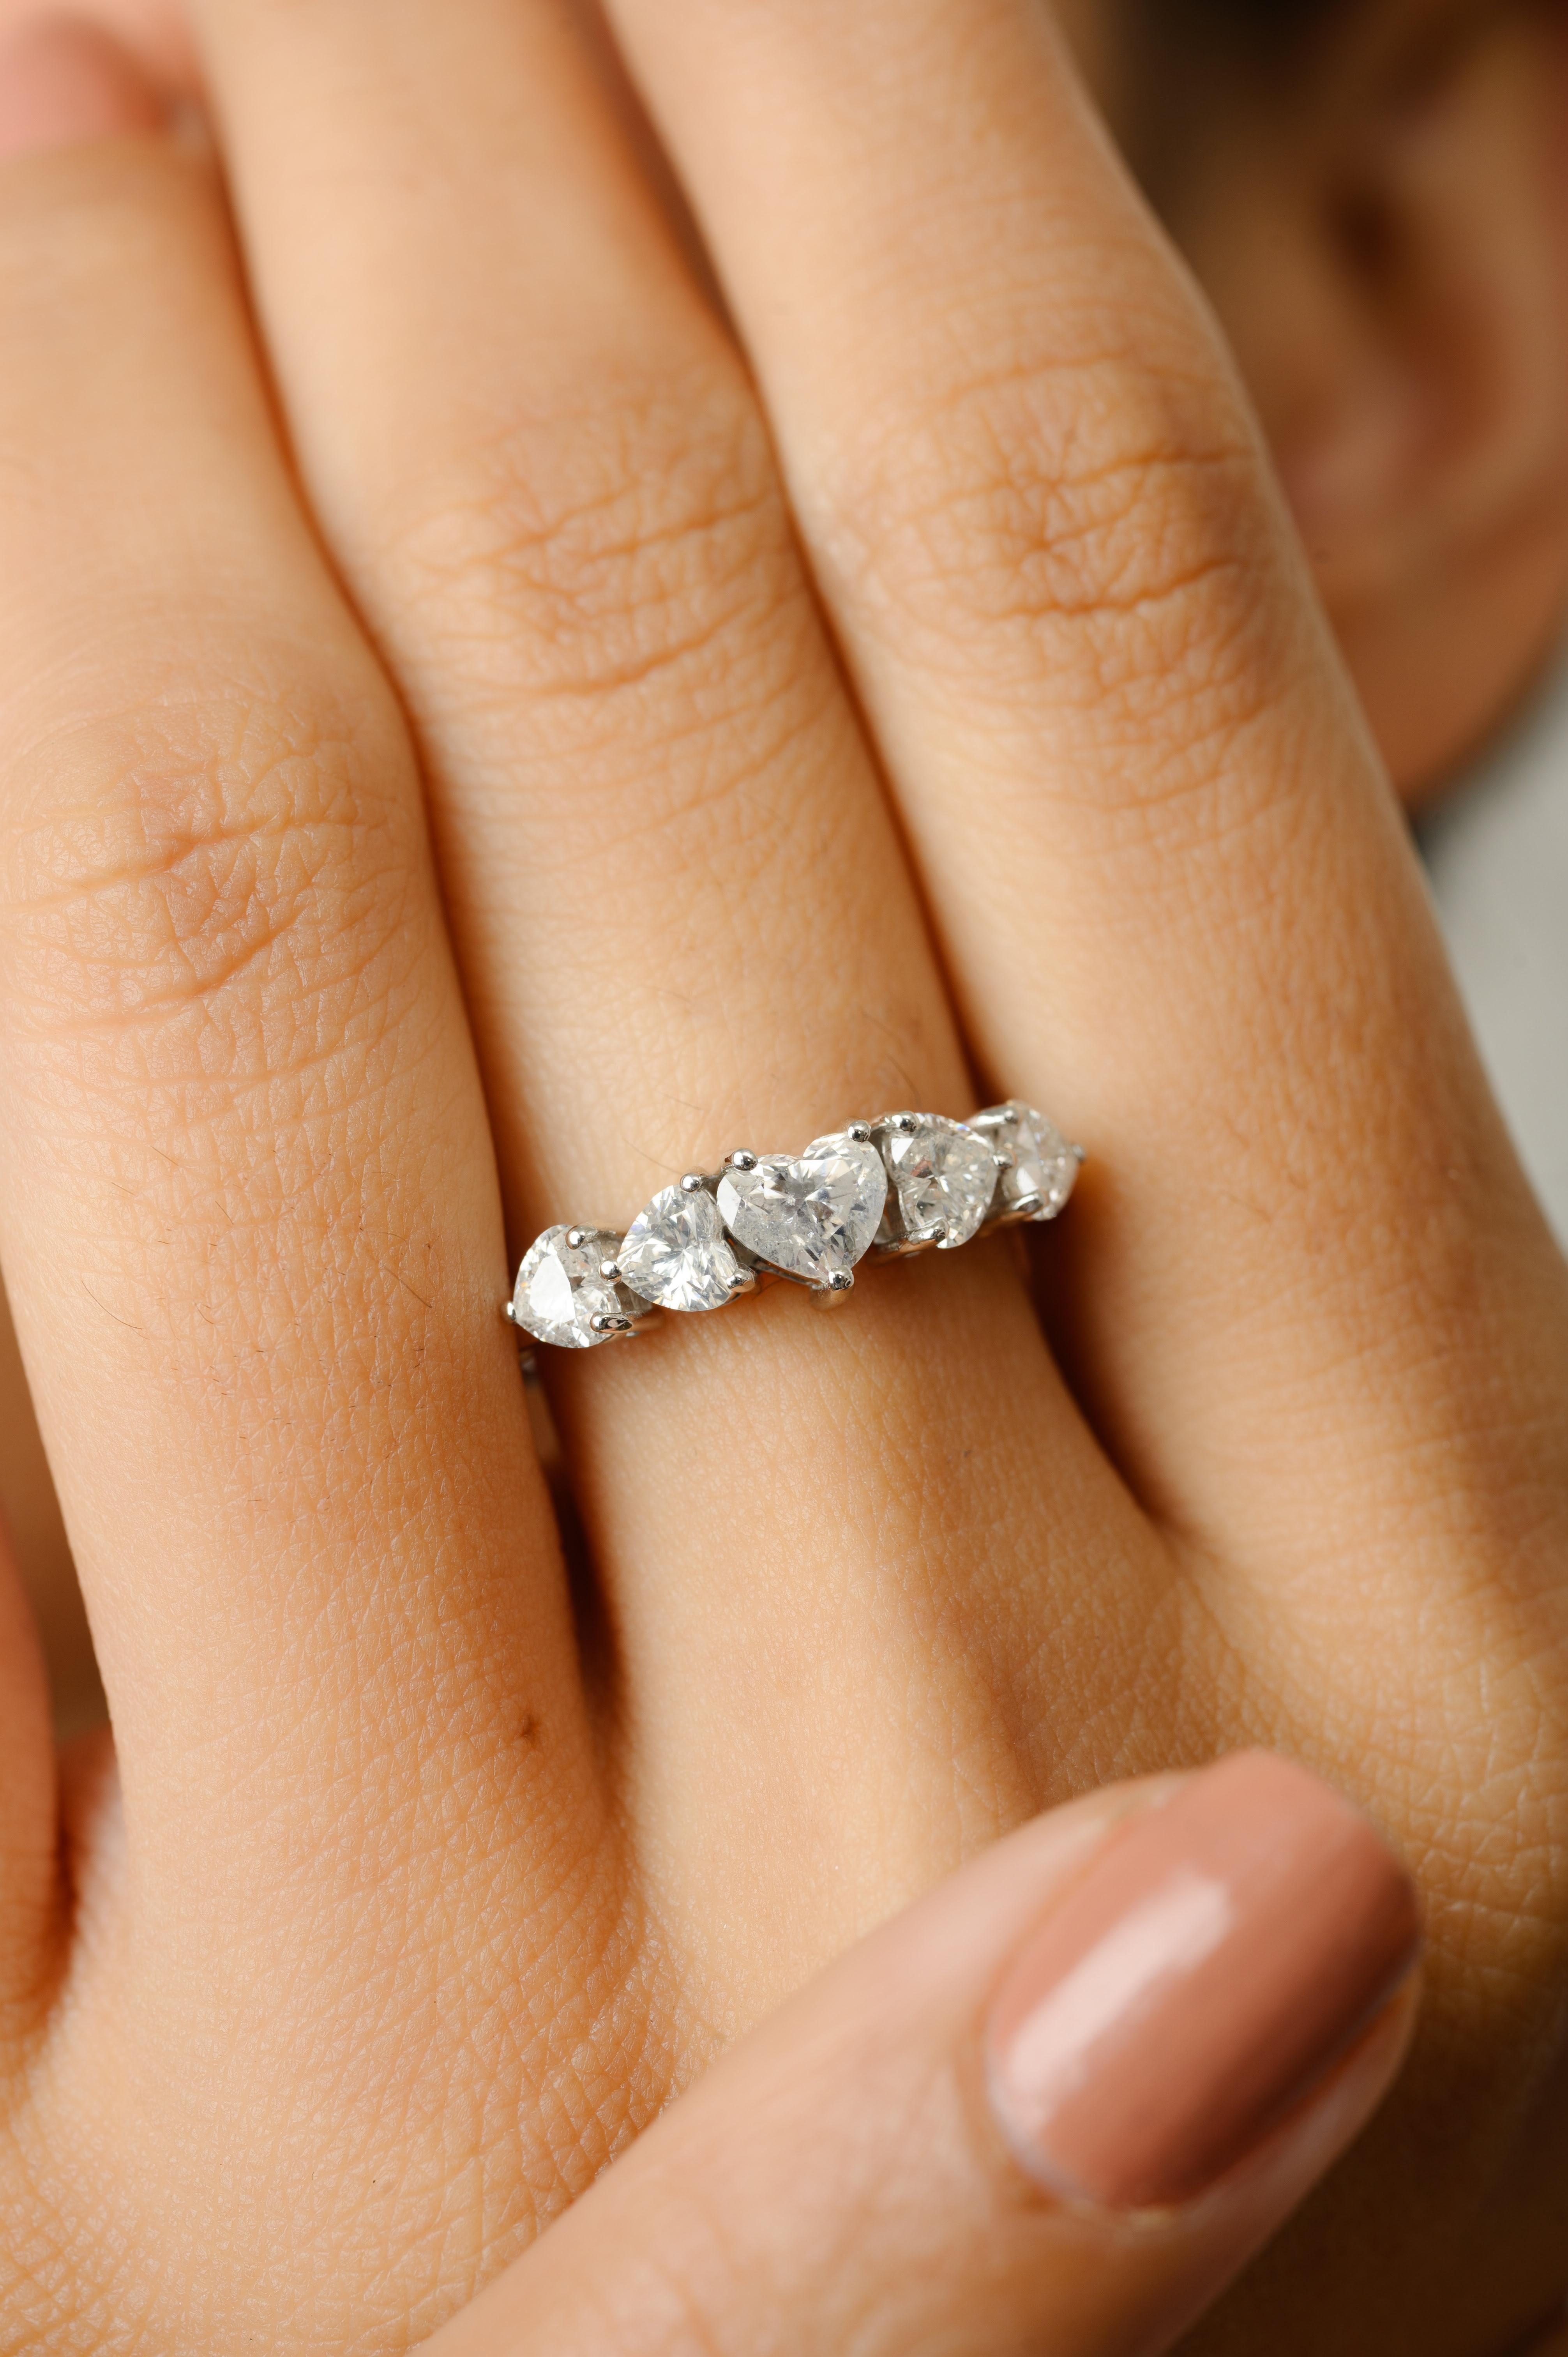 En vente :  Bague de fiançailles à cinq diamants en or blanc massif 18 carats 2